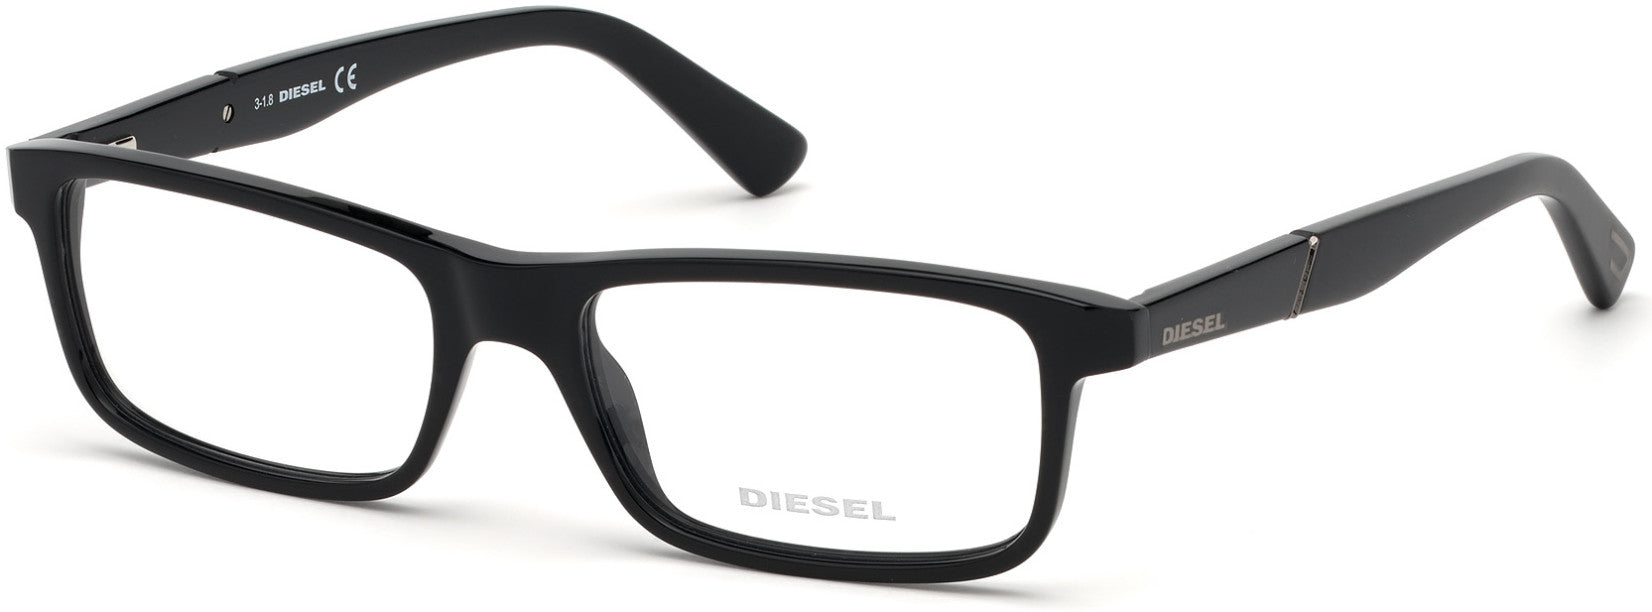 Diesel DL5292 Rectangular Eyeglasses 001-001 - Shiny Black